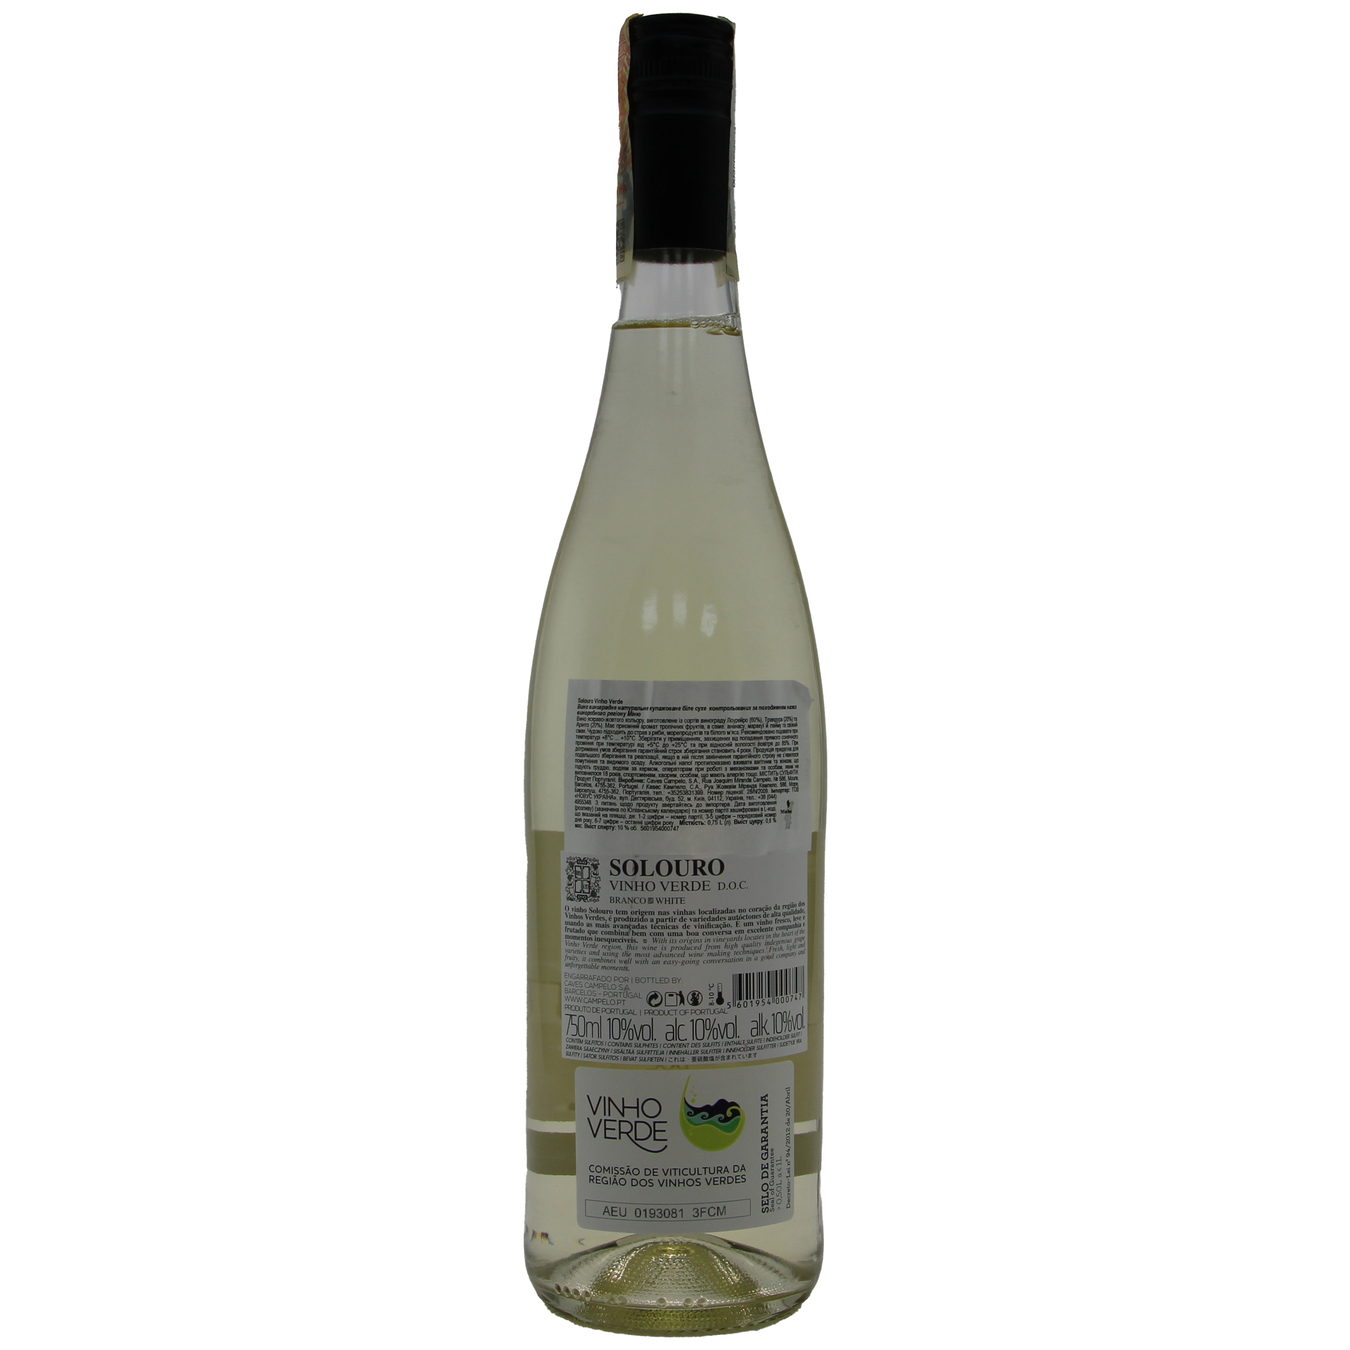 Solouro Branco Vinho Verde DOC white dry wine 10% 0,75l 2